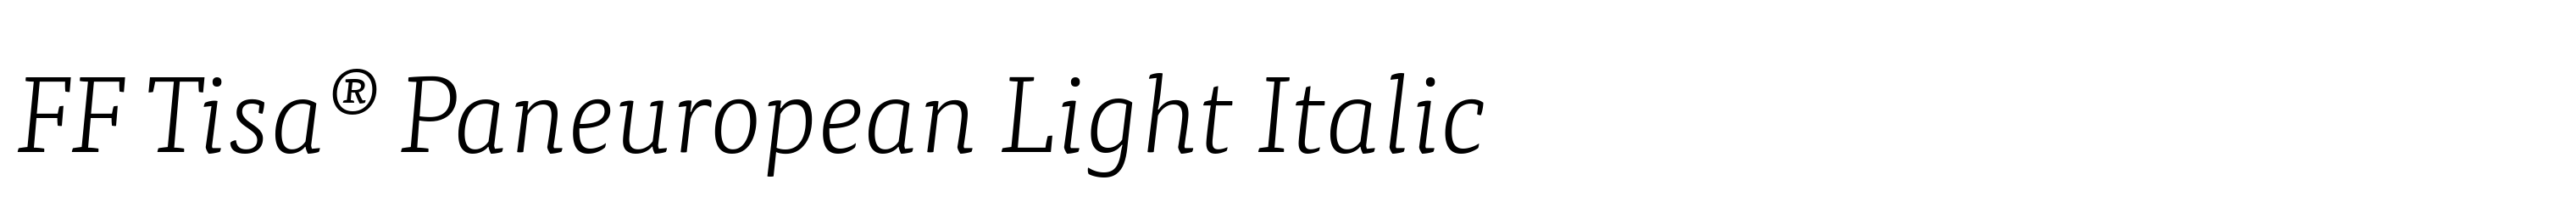 FF Tisa® Paneuropean Light Italic